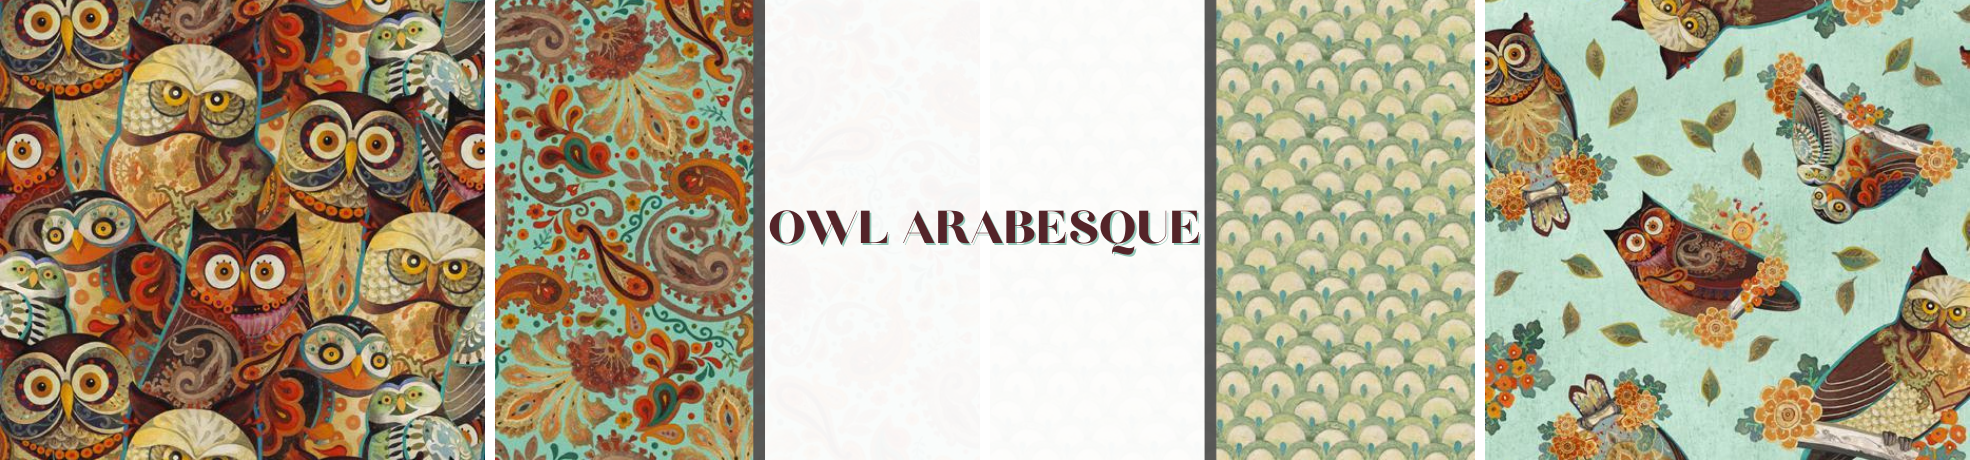 Owl Arabesque Fabric Collection